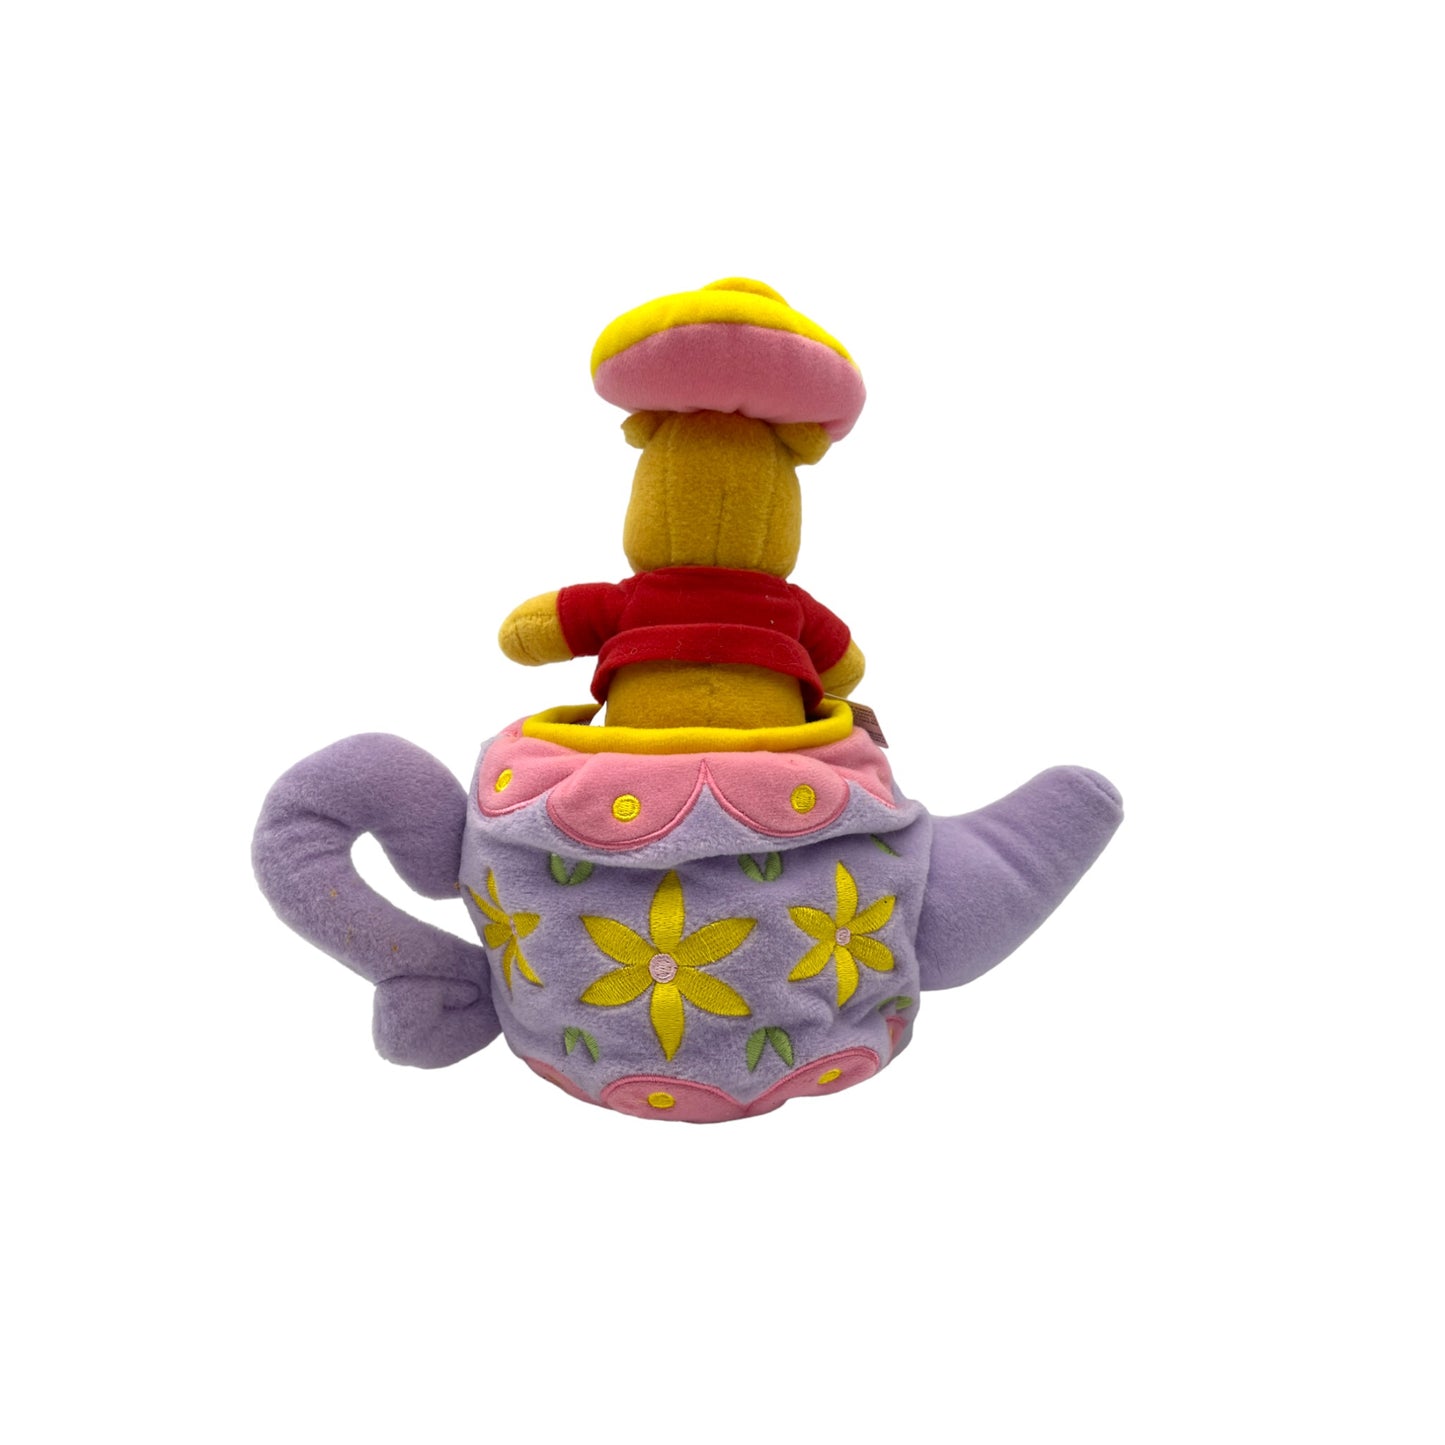 Disney Store - Teapot With Surprise Pooh - Mini Bean Bag - Vintage - 10"